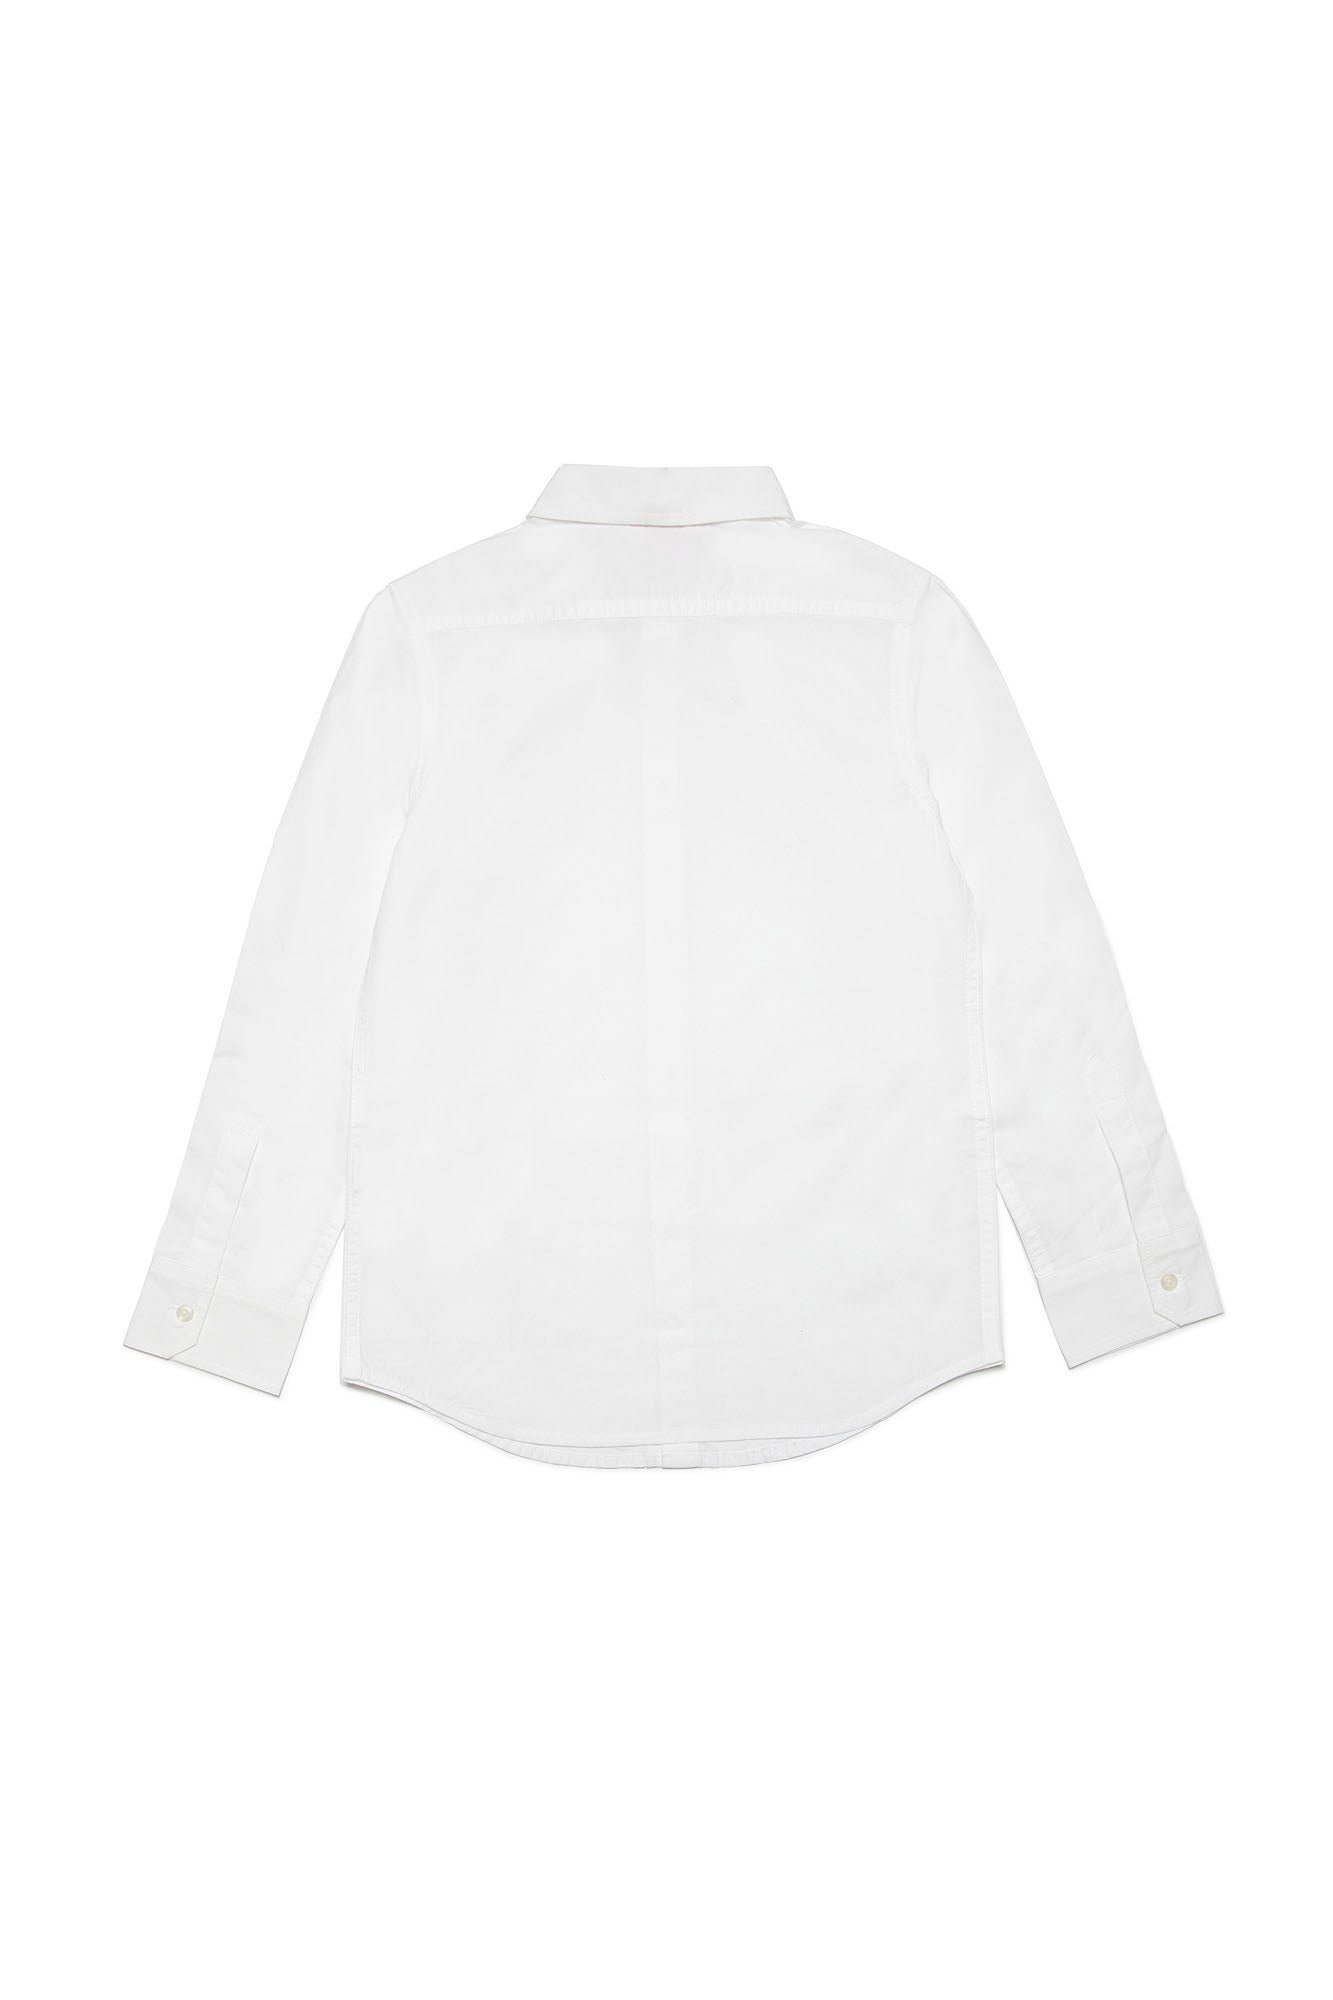 Diesel Boys Long Sleeve White Dress Shirt_ J01746